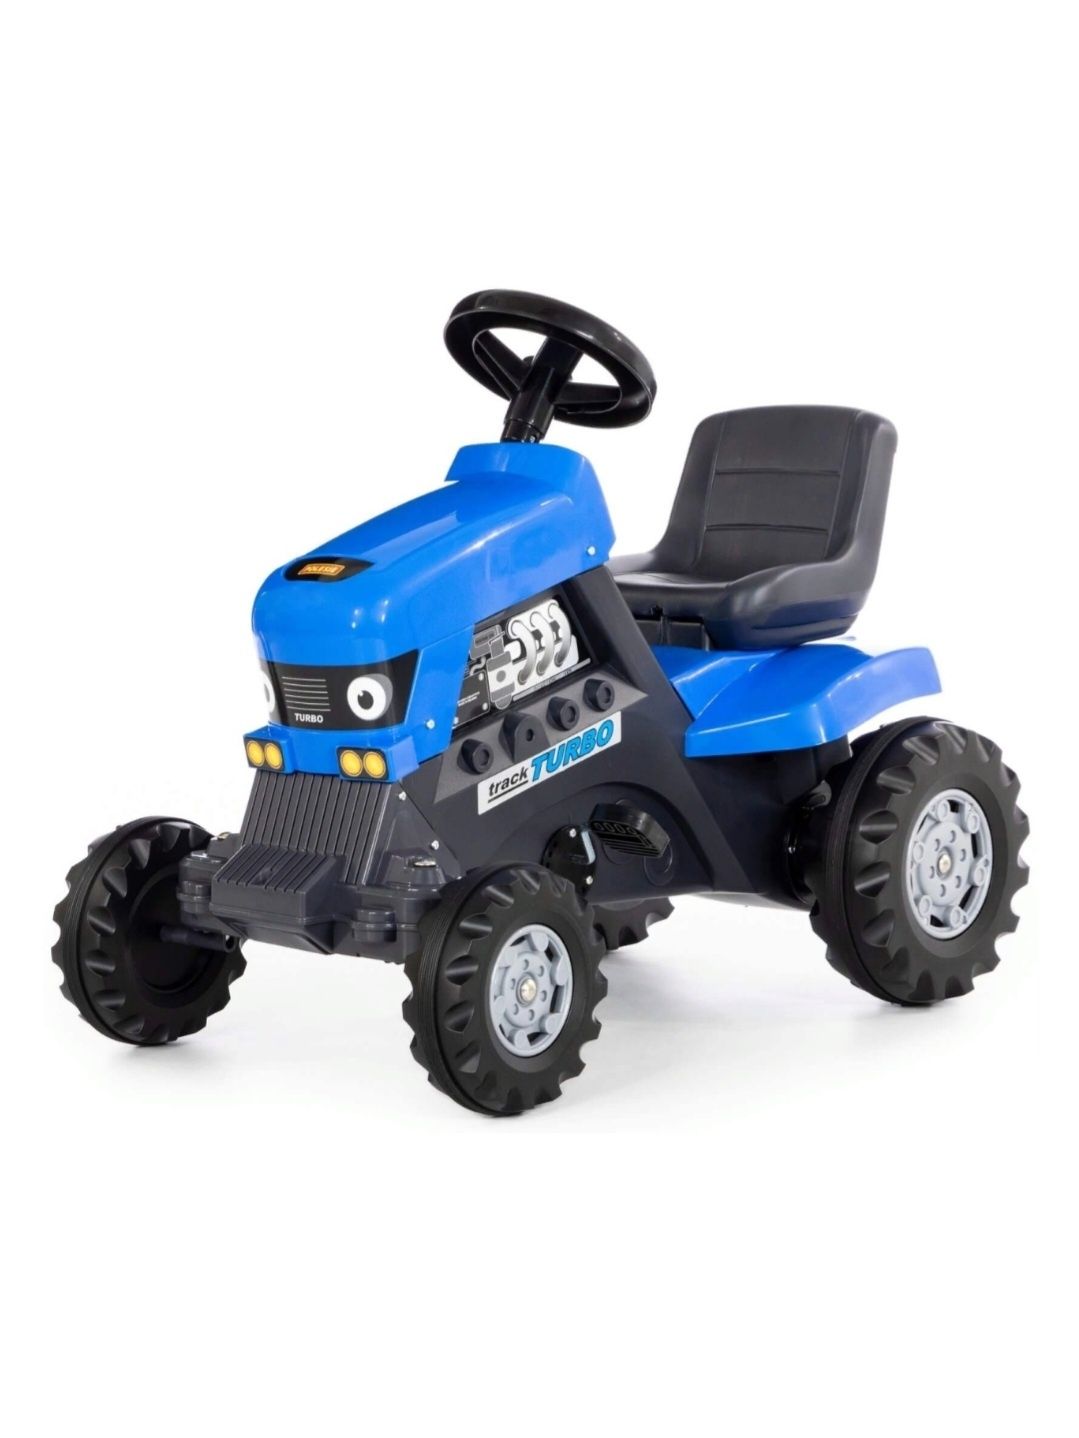 Синий трактор с педалями каталка машинки велосипед самакат ролики дети